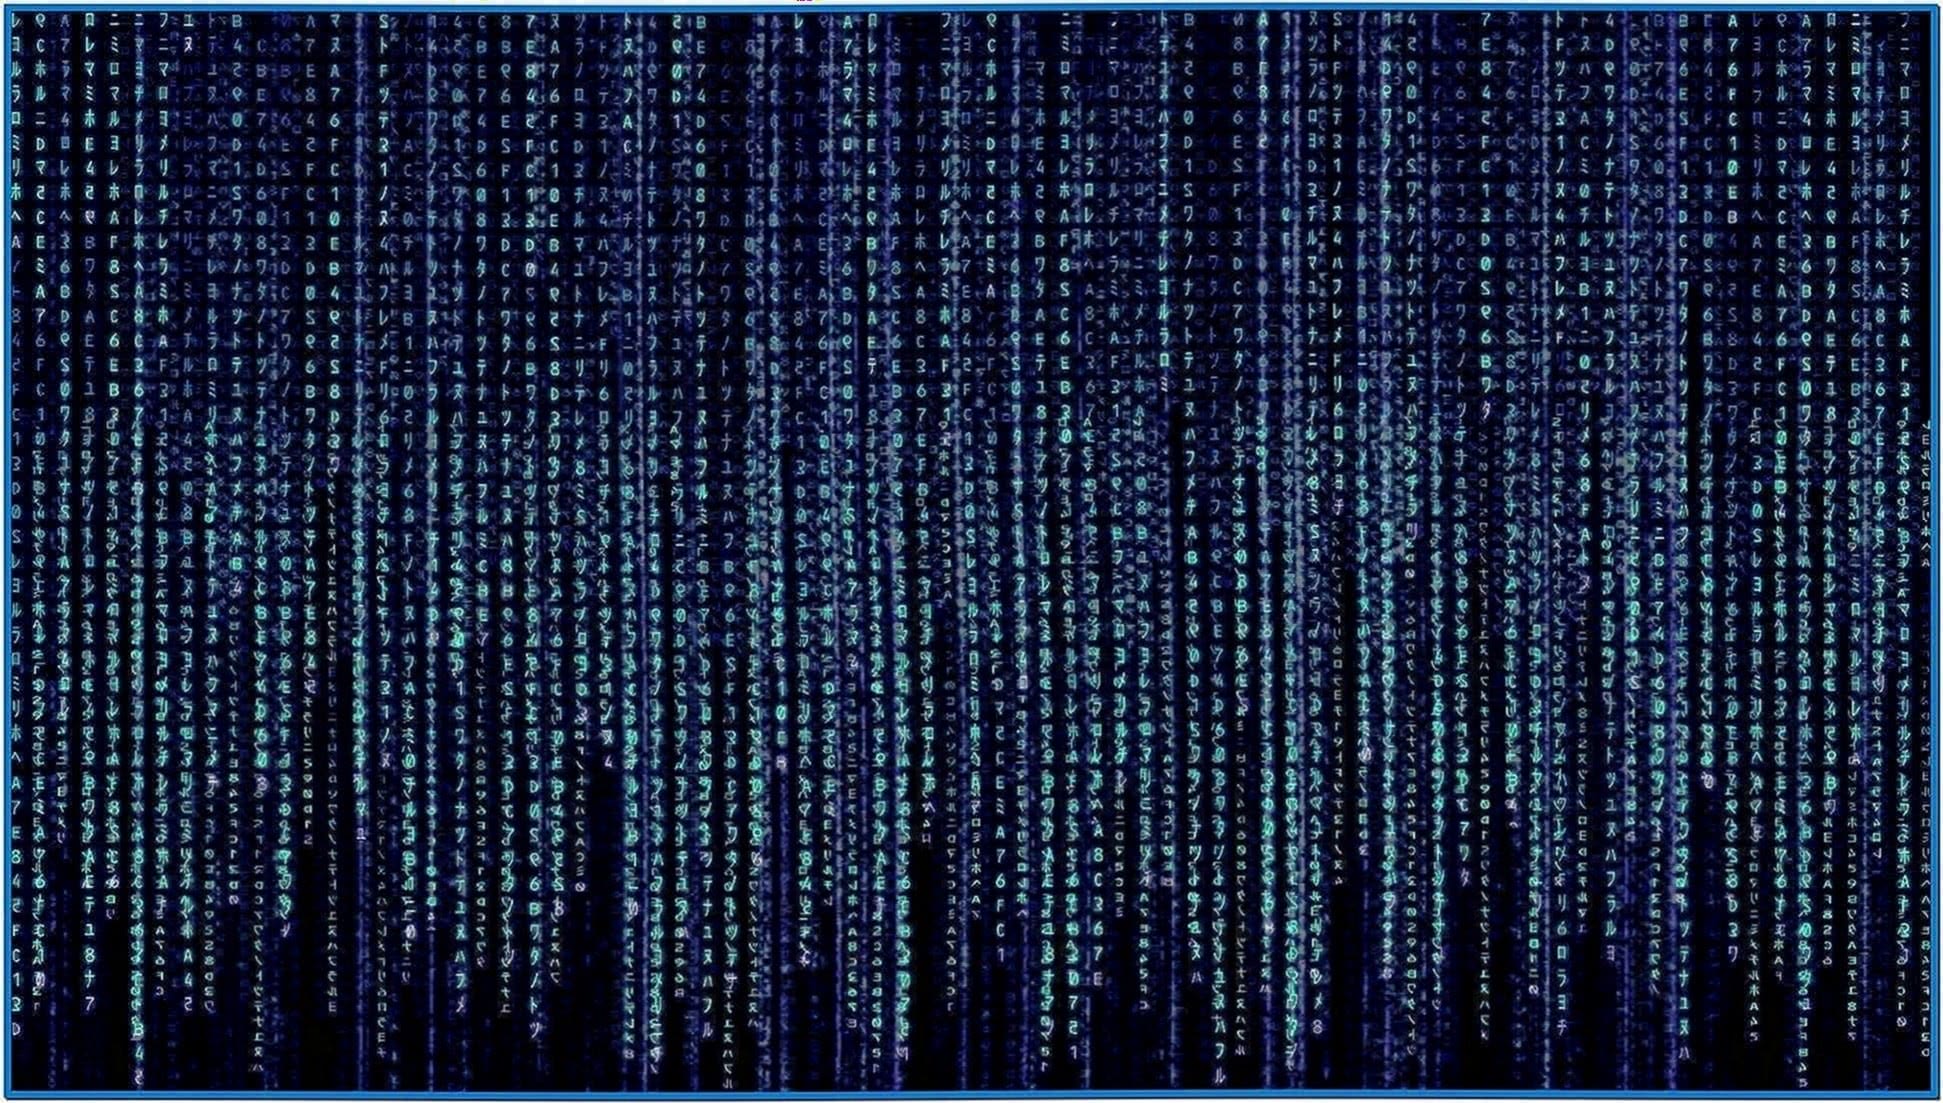 Blue matrix code screensaver - Download free